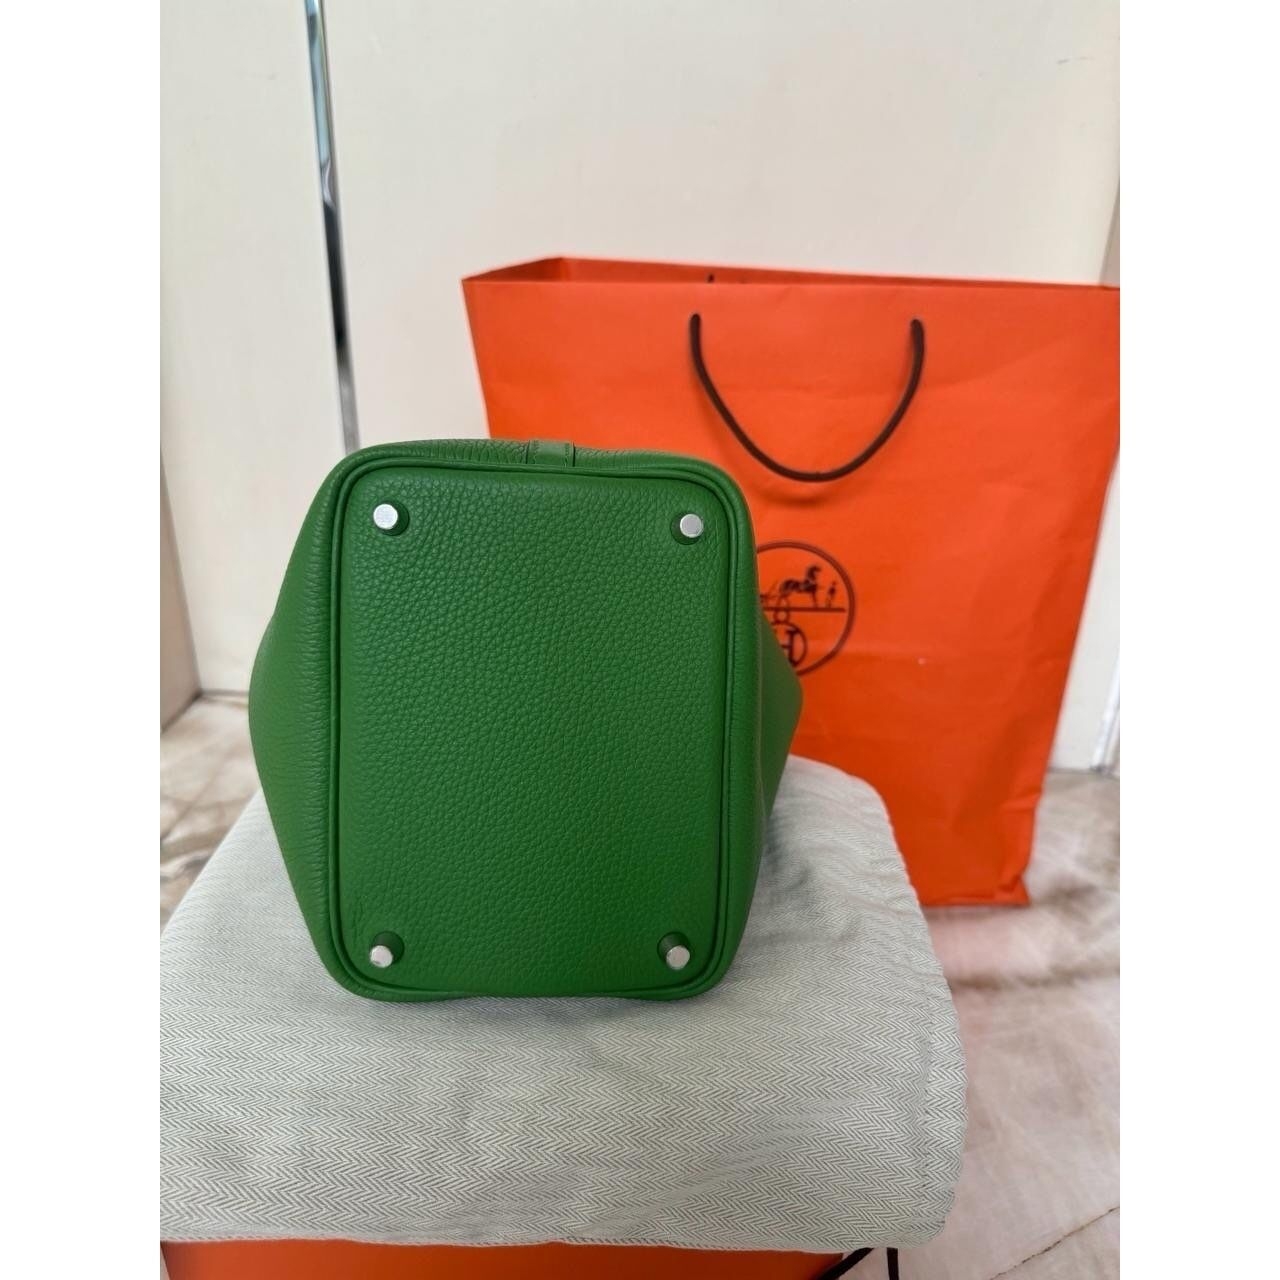 Hermes Picotin Blue & Green Handbag